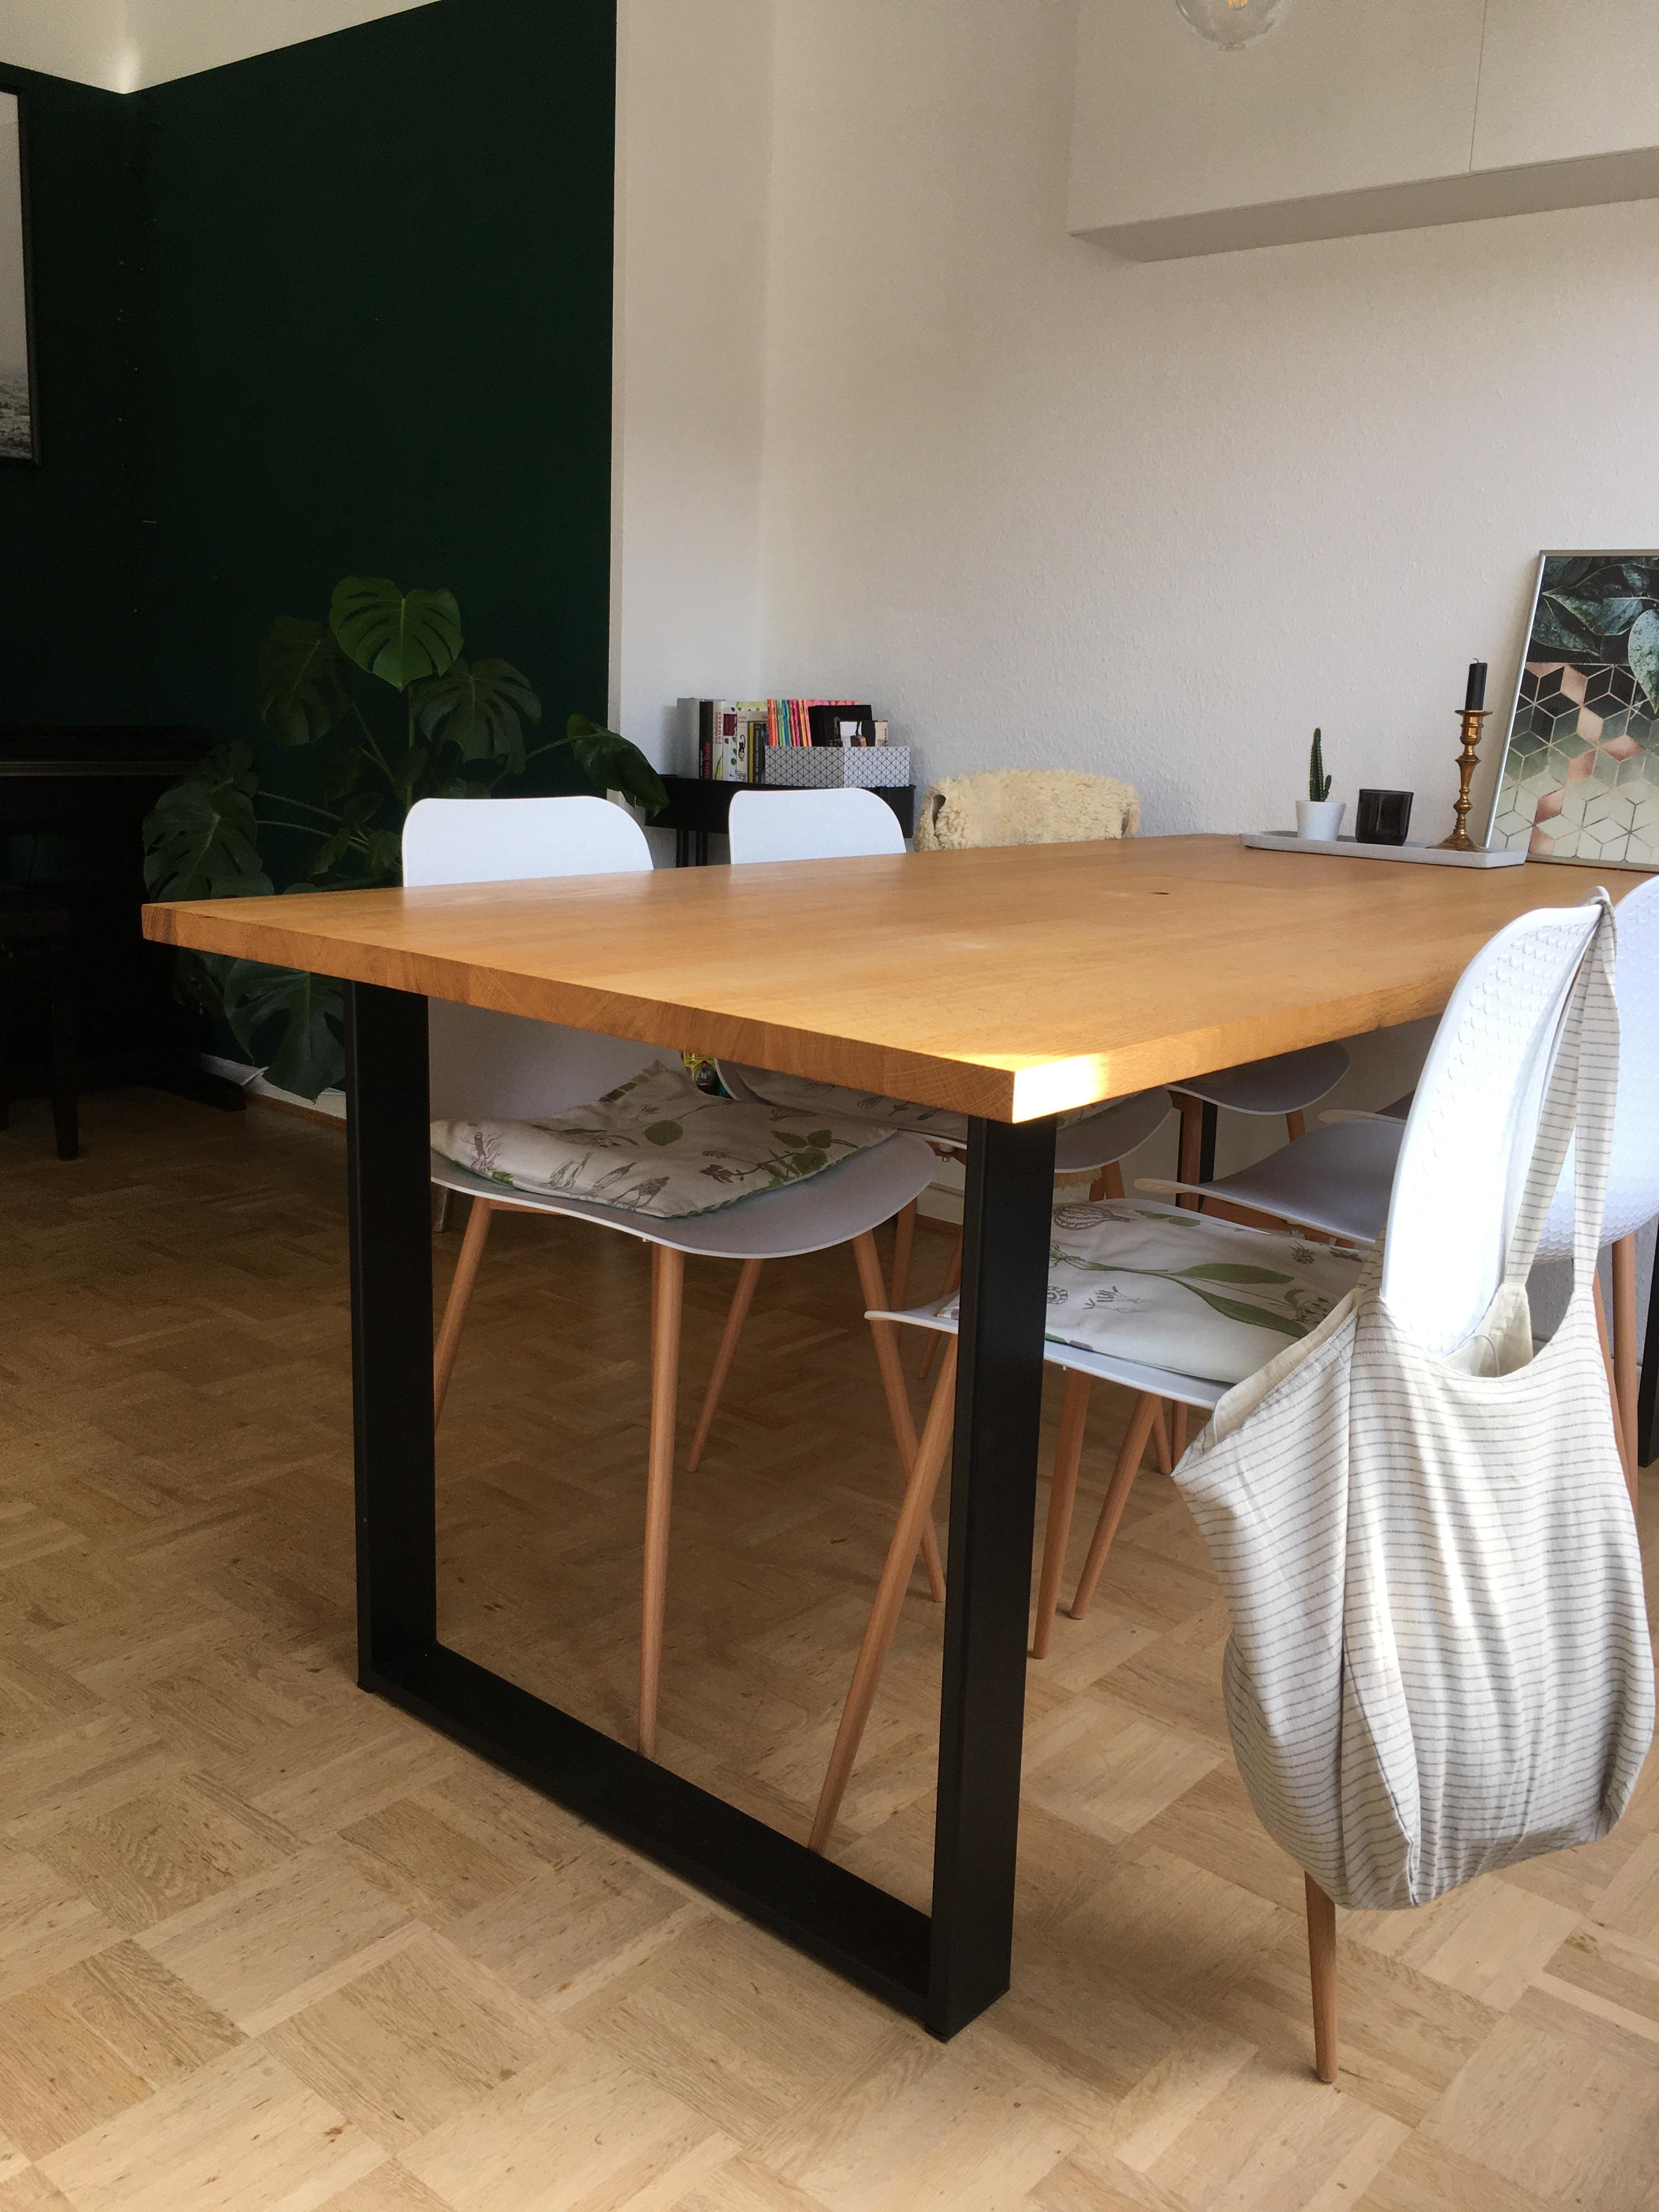 da isst‘s sich gut dran!
#table #essecke #eiche #diy #diningroom #liebling #interior 